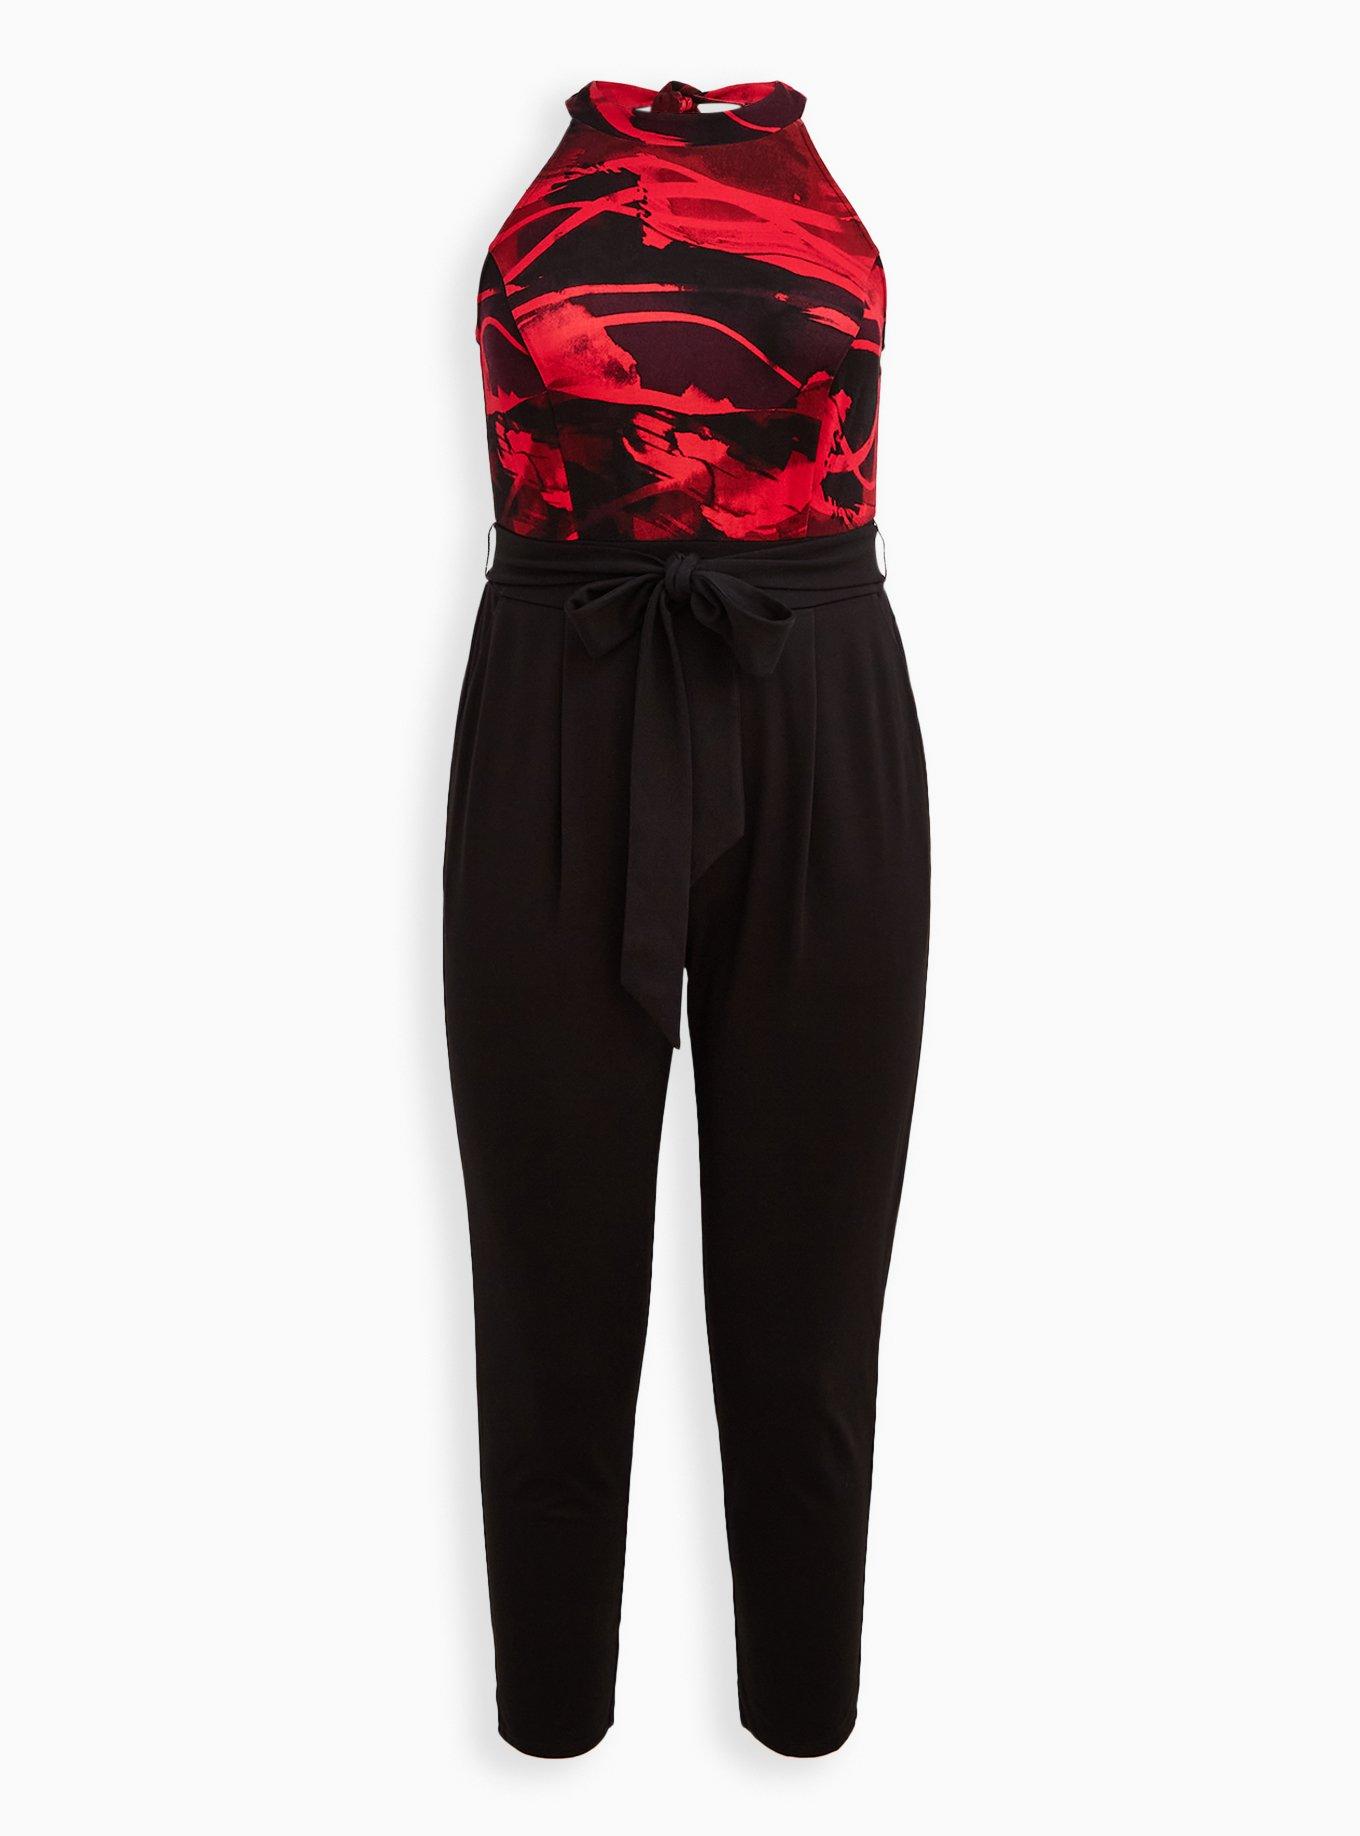 Plus Size - Jumpsuit - Red & Black - Torrid